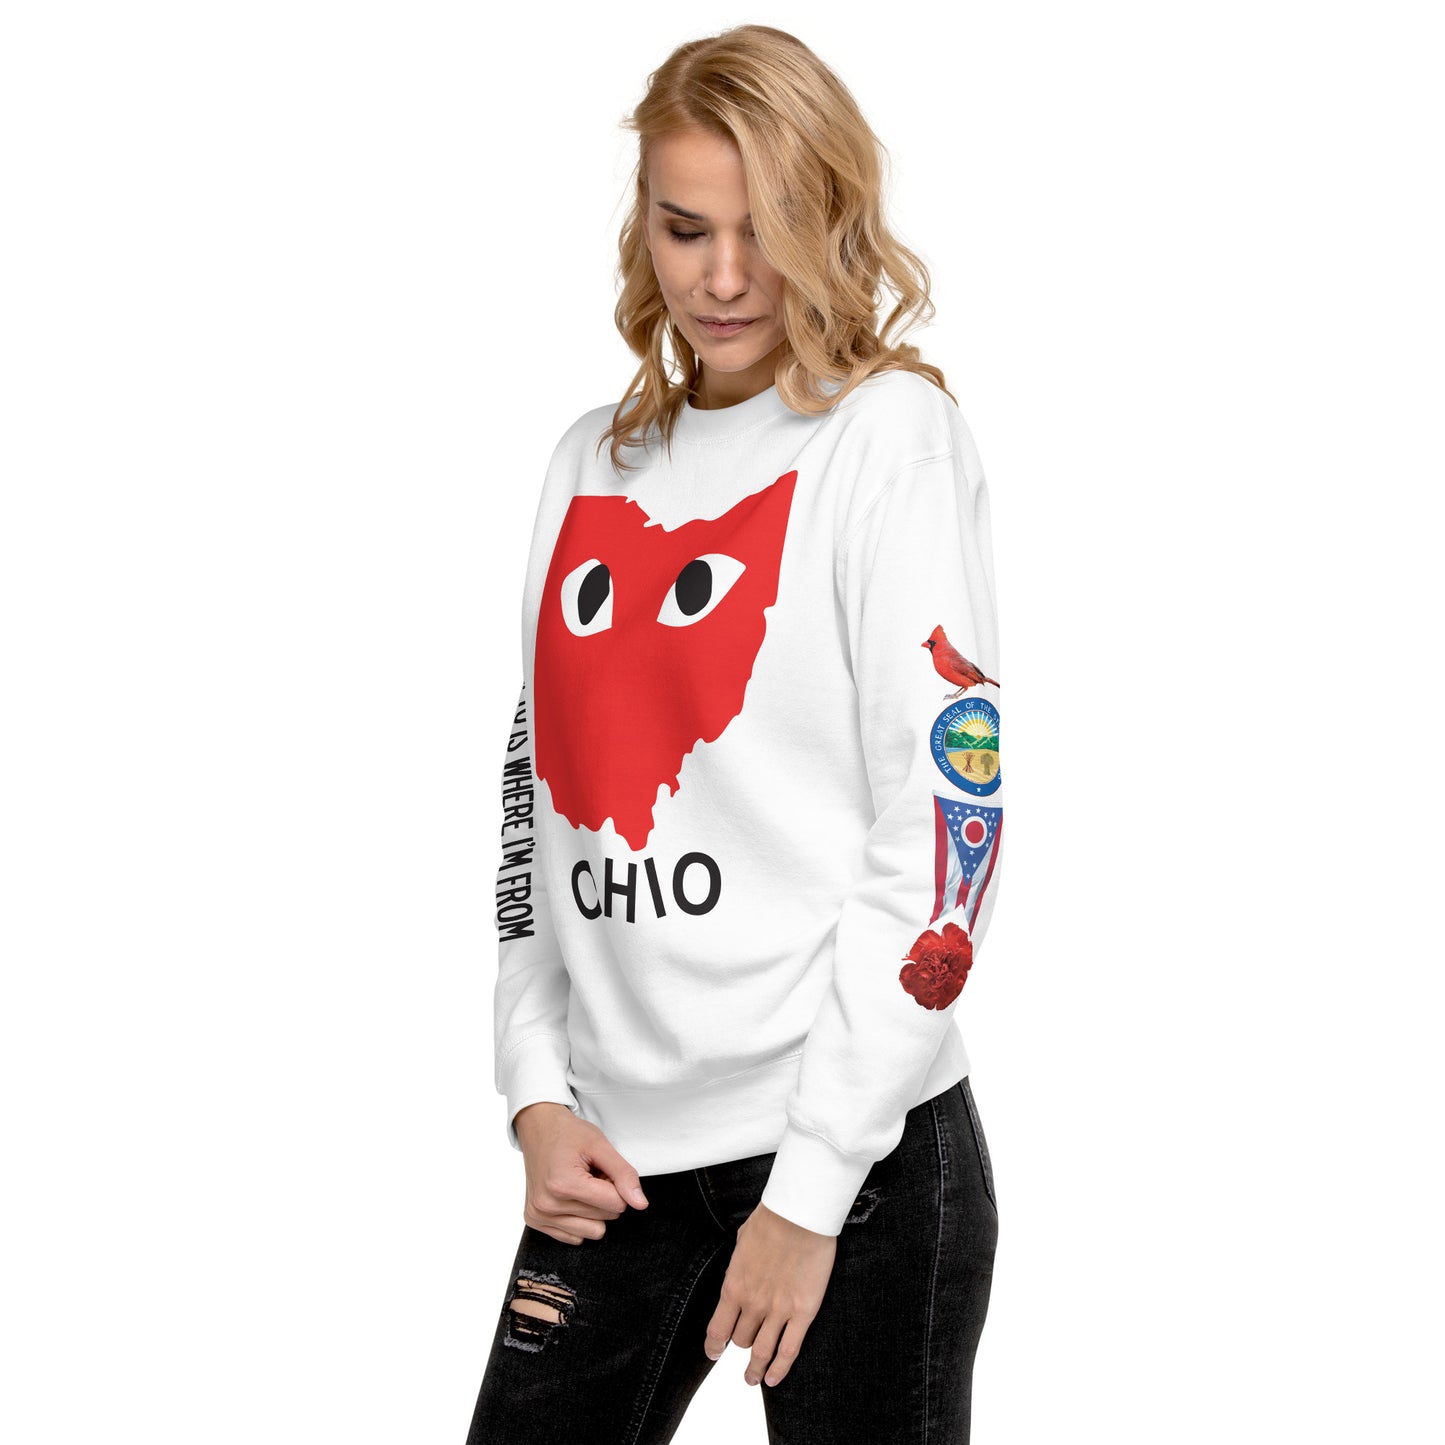 Designer Ohio Sweatshirt